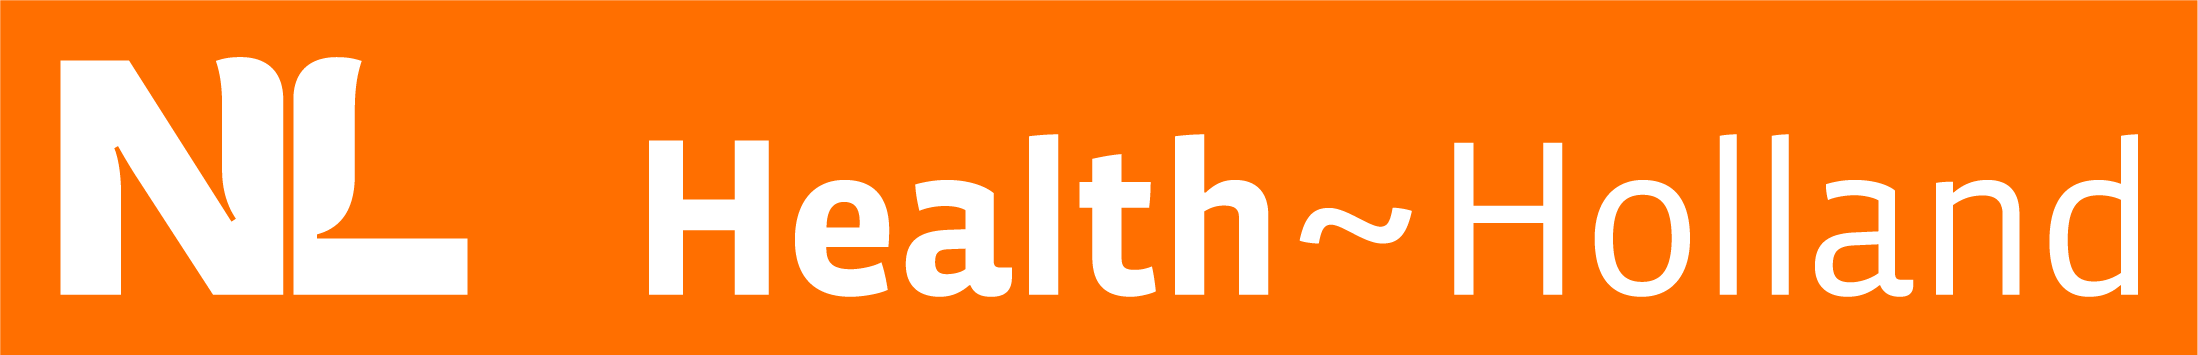 Health~Holland